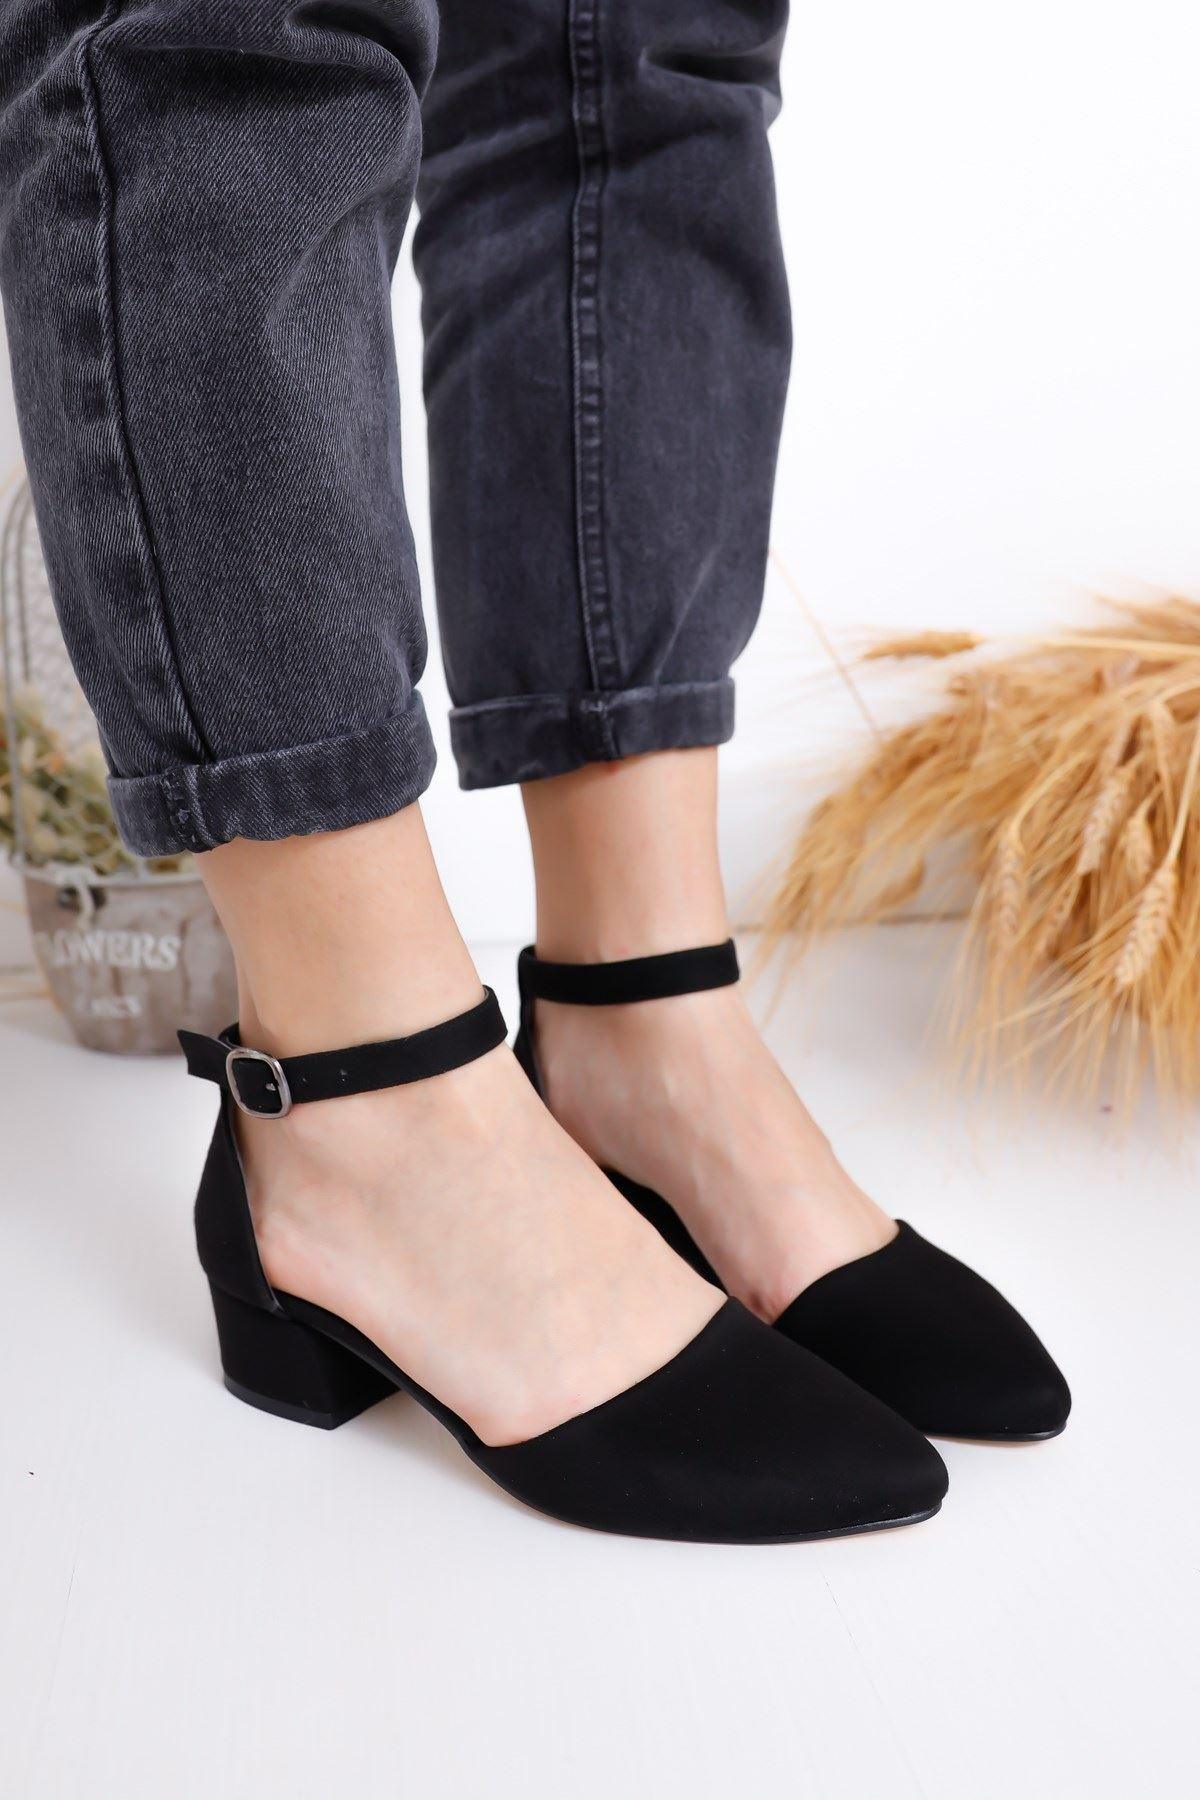 Women's Dary Heels Black Suede Shoes - STREET MODE ™